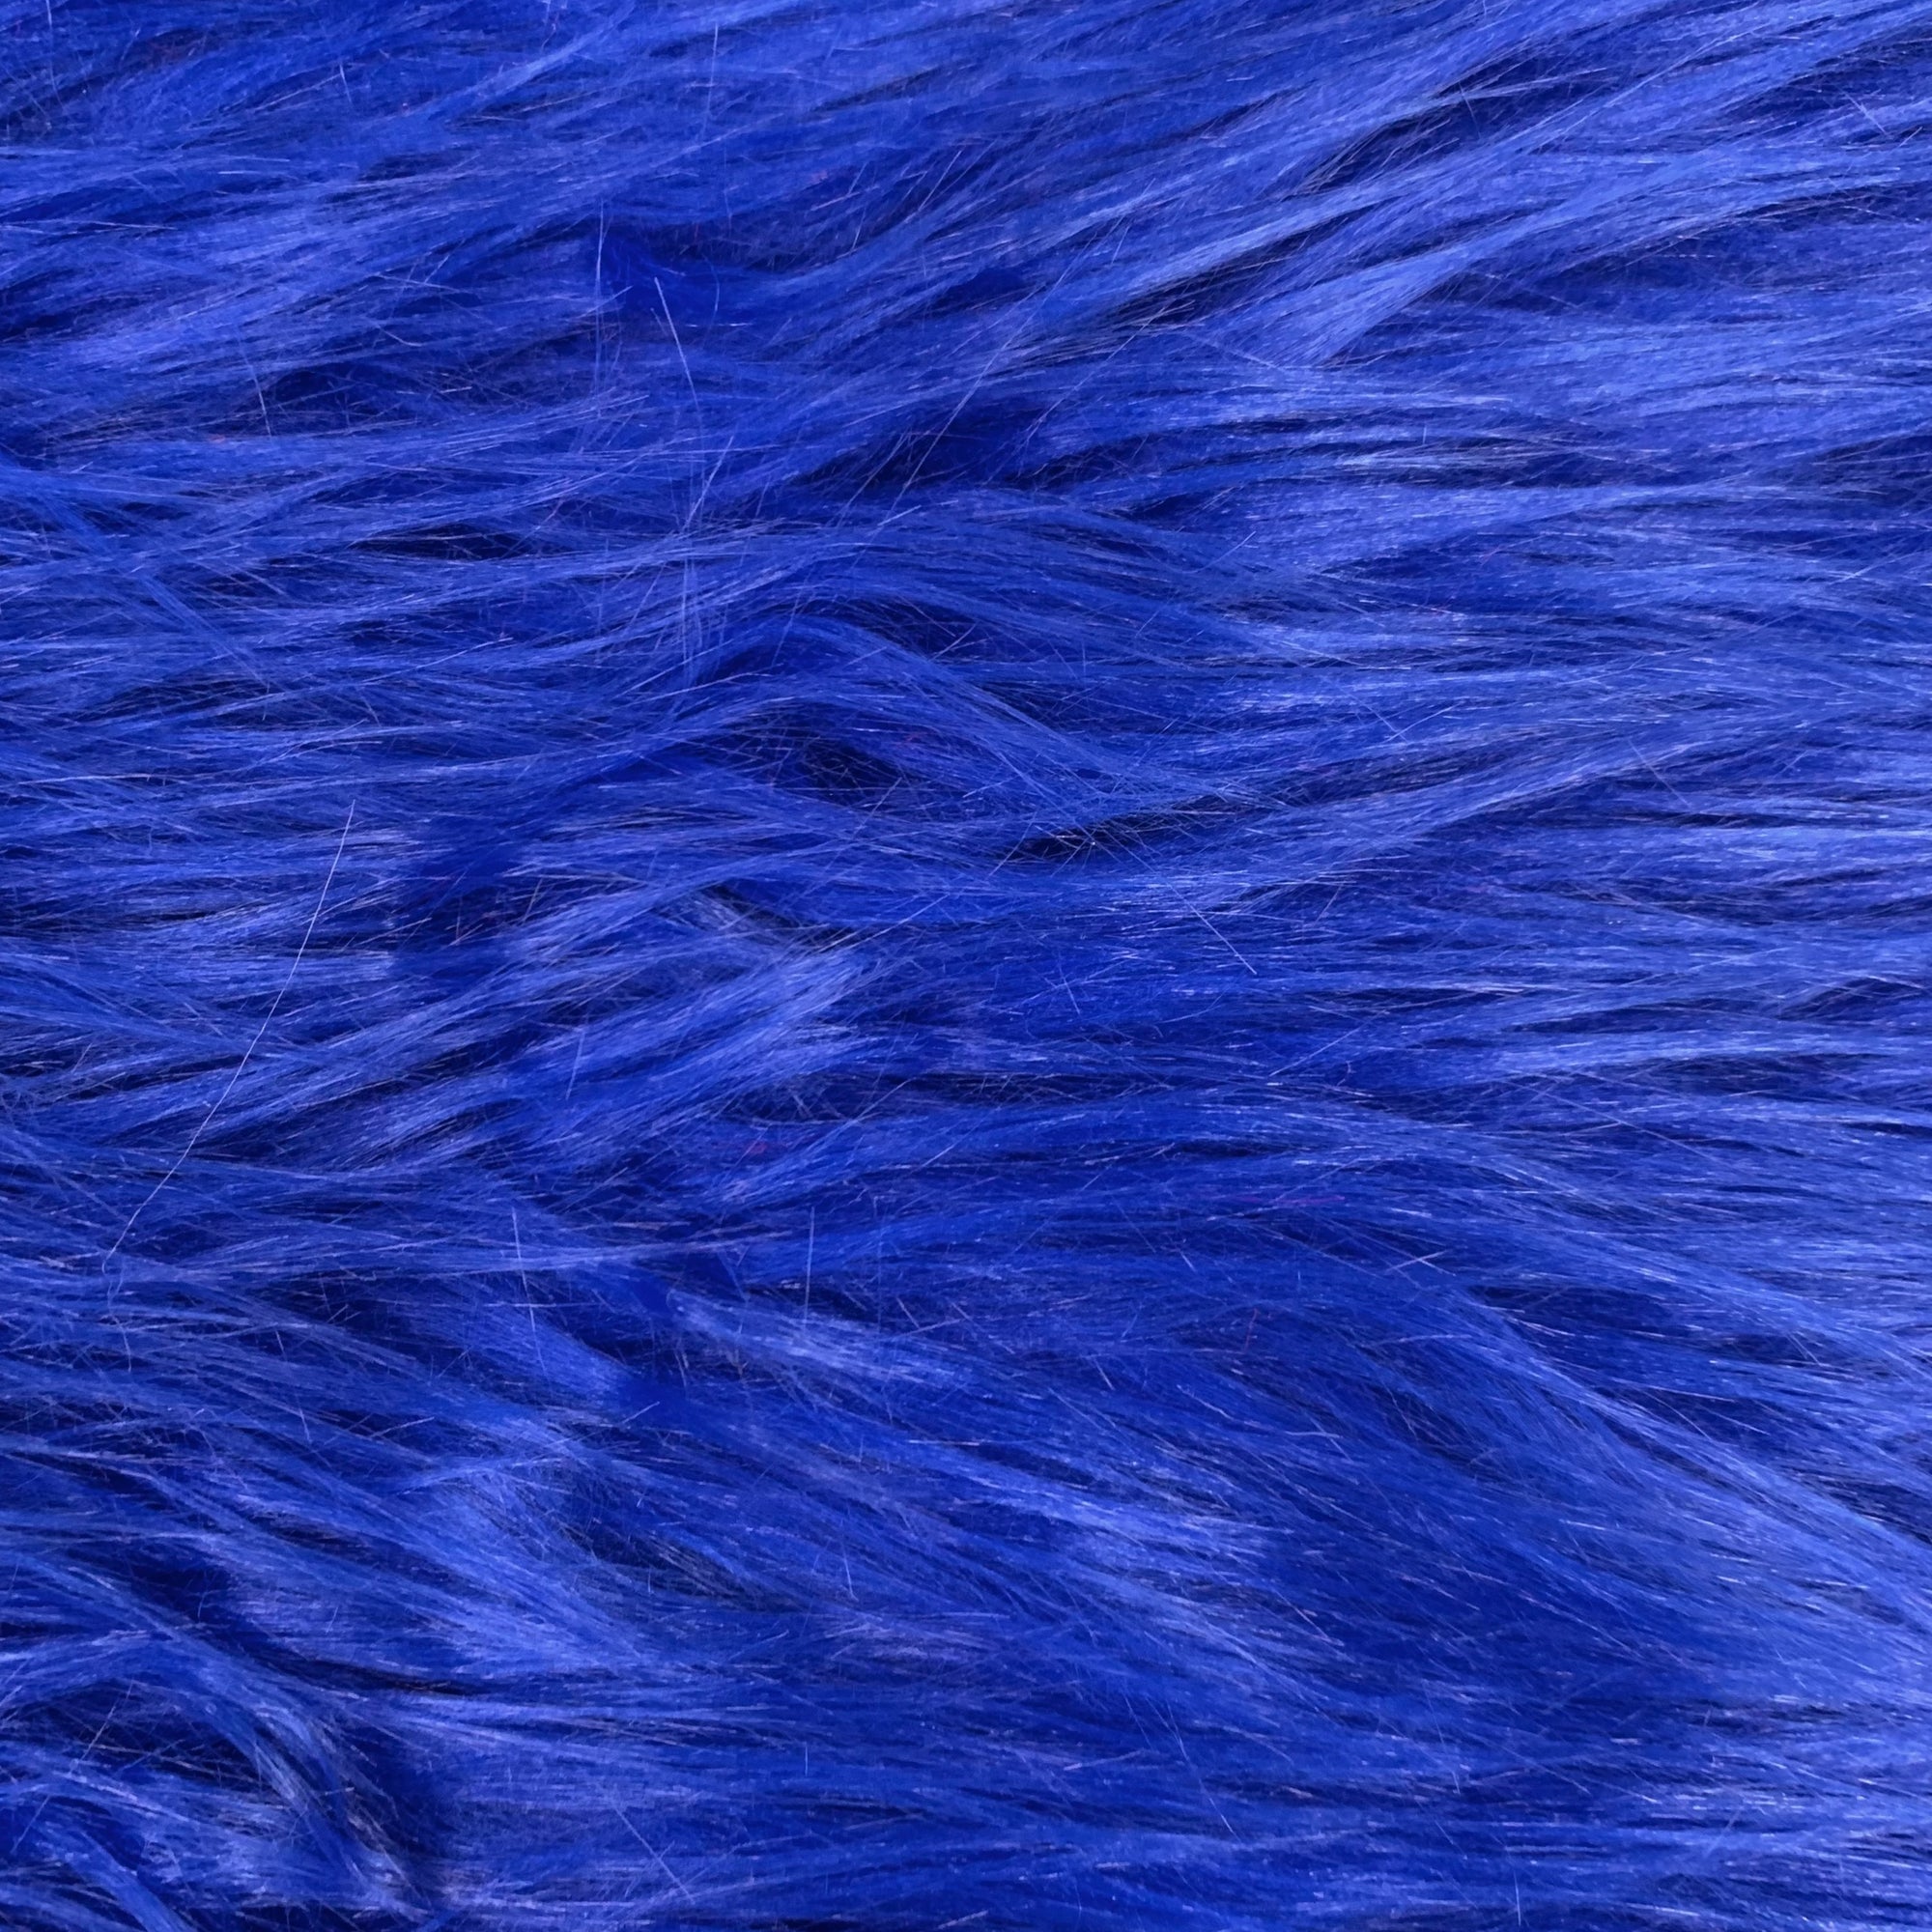 Eden ROYAL BLUE Shaggy Long Pile Soft Faux Fur Fabric for Fursuit, Cosplay Costume, Photo Prop, Trim, Throw Pillow, Crafts